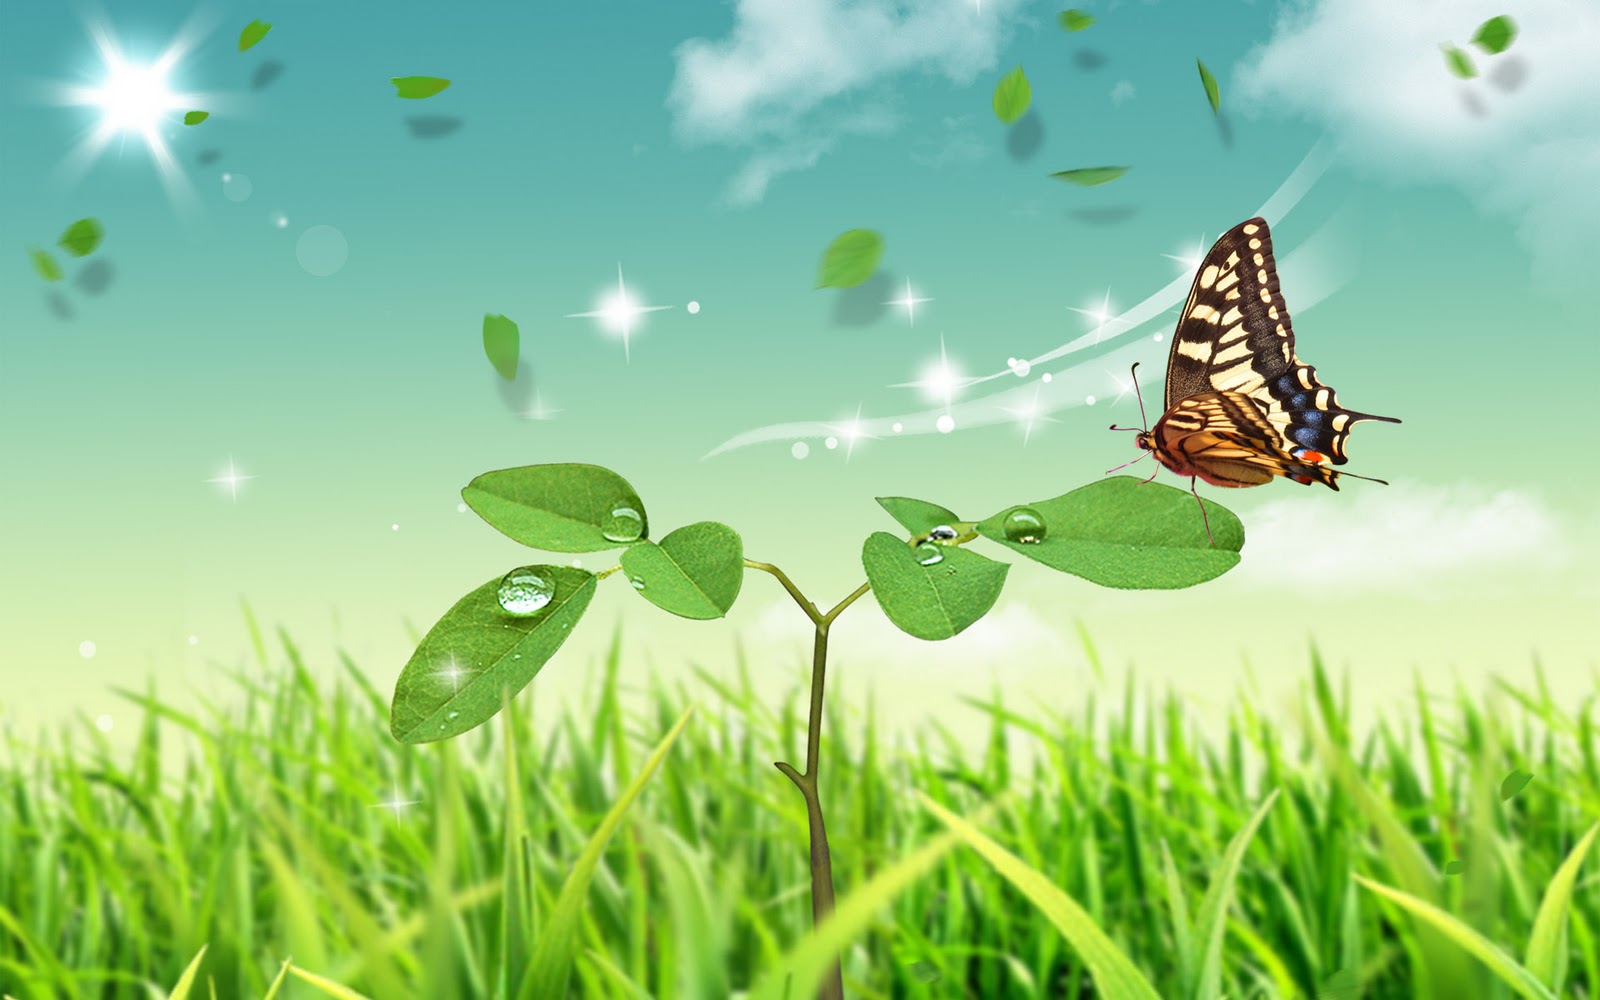 roj wallpaper,mariposa,verde,naturaleza,paisaje natural,insecto